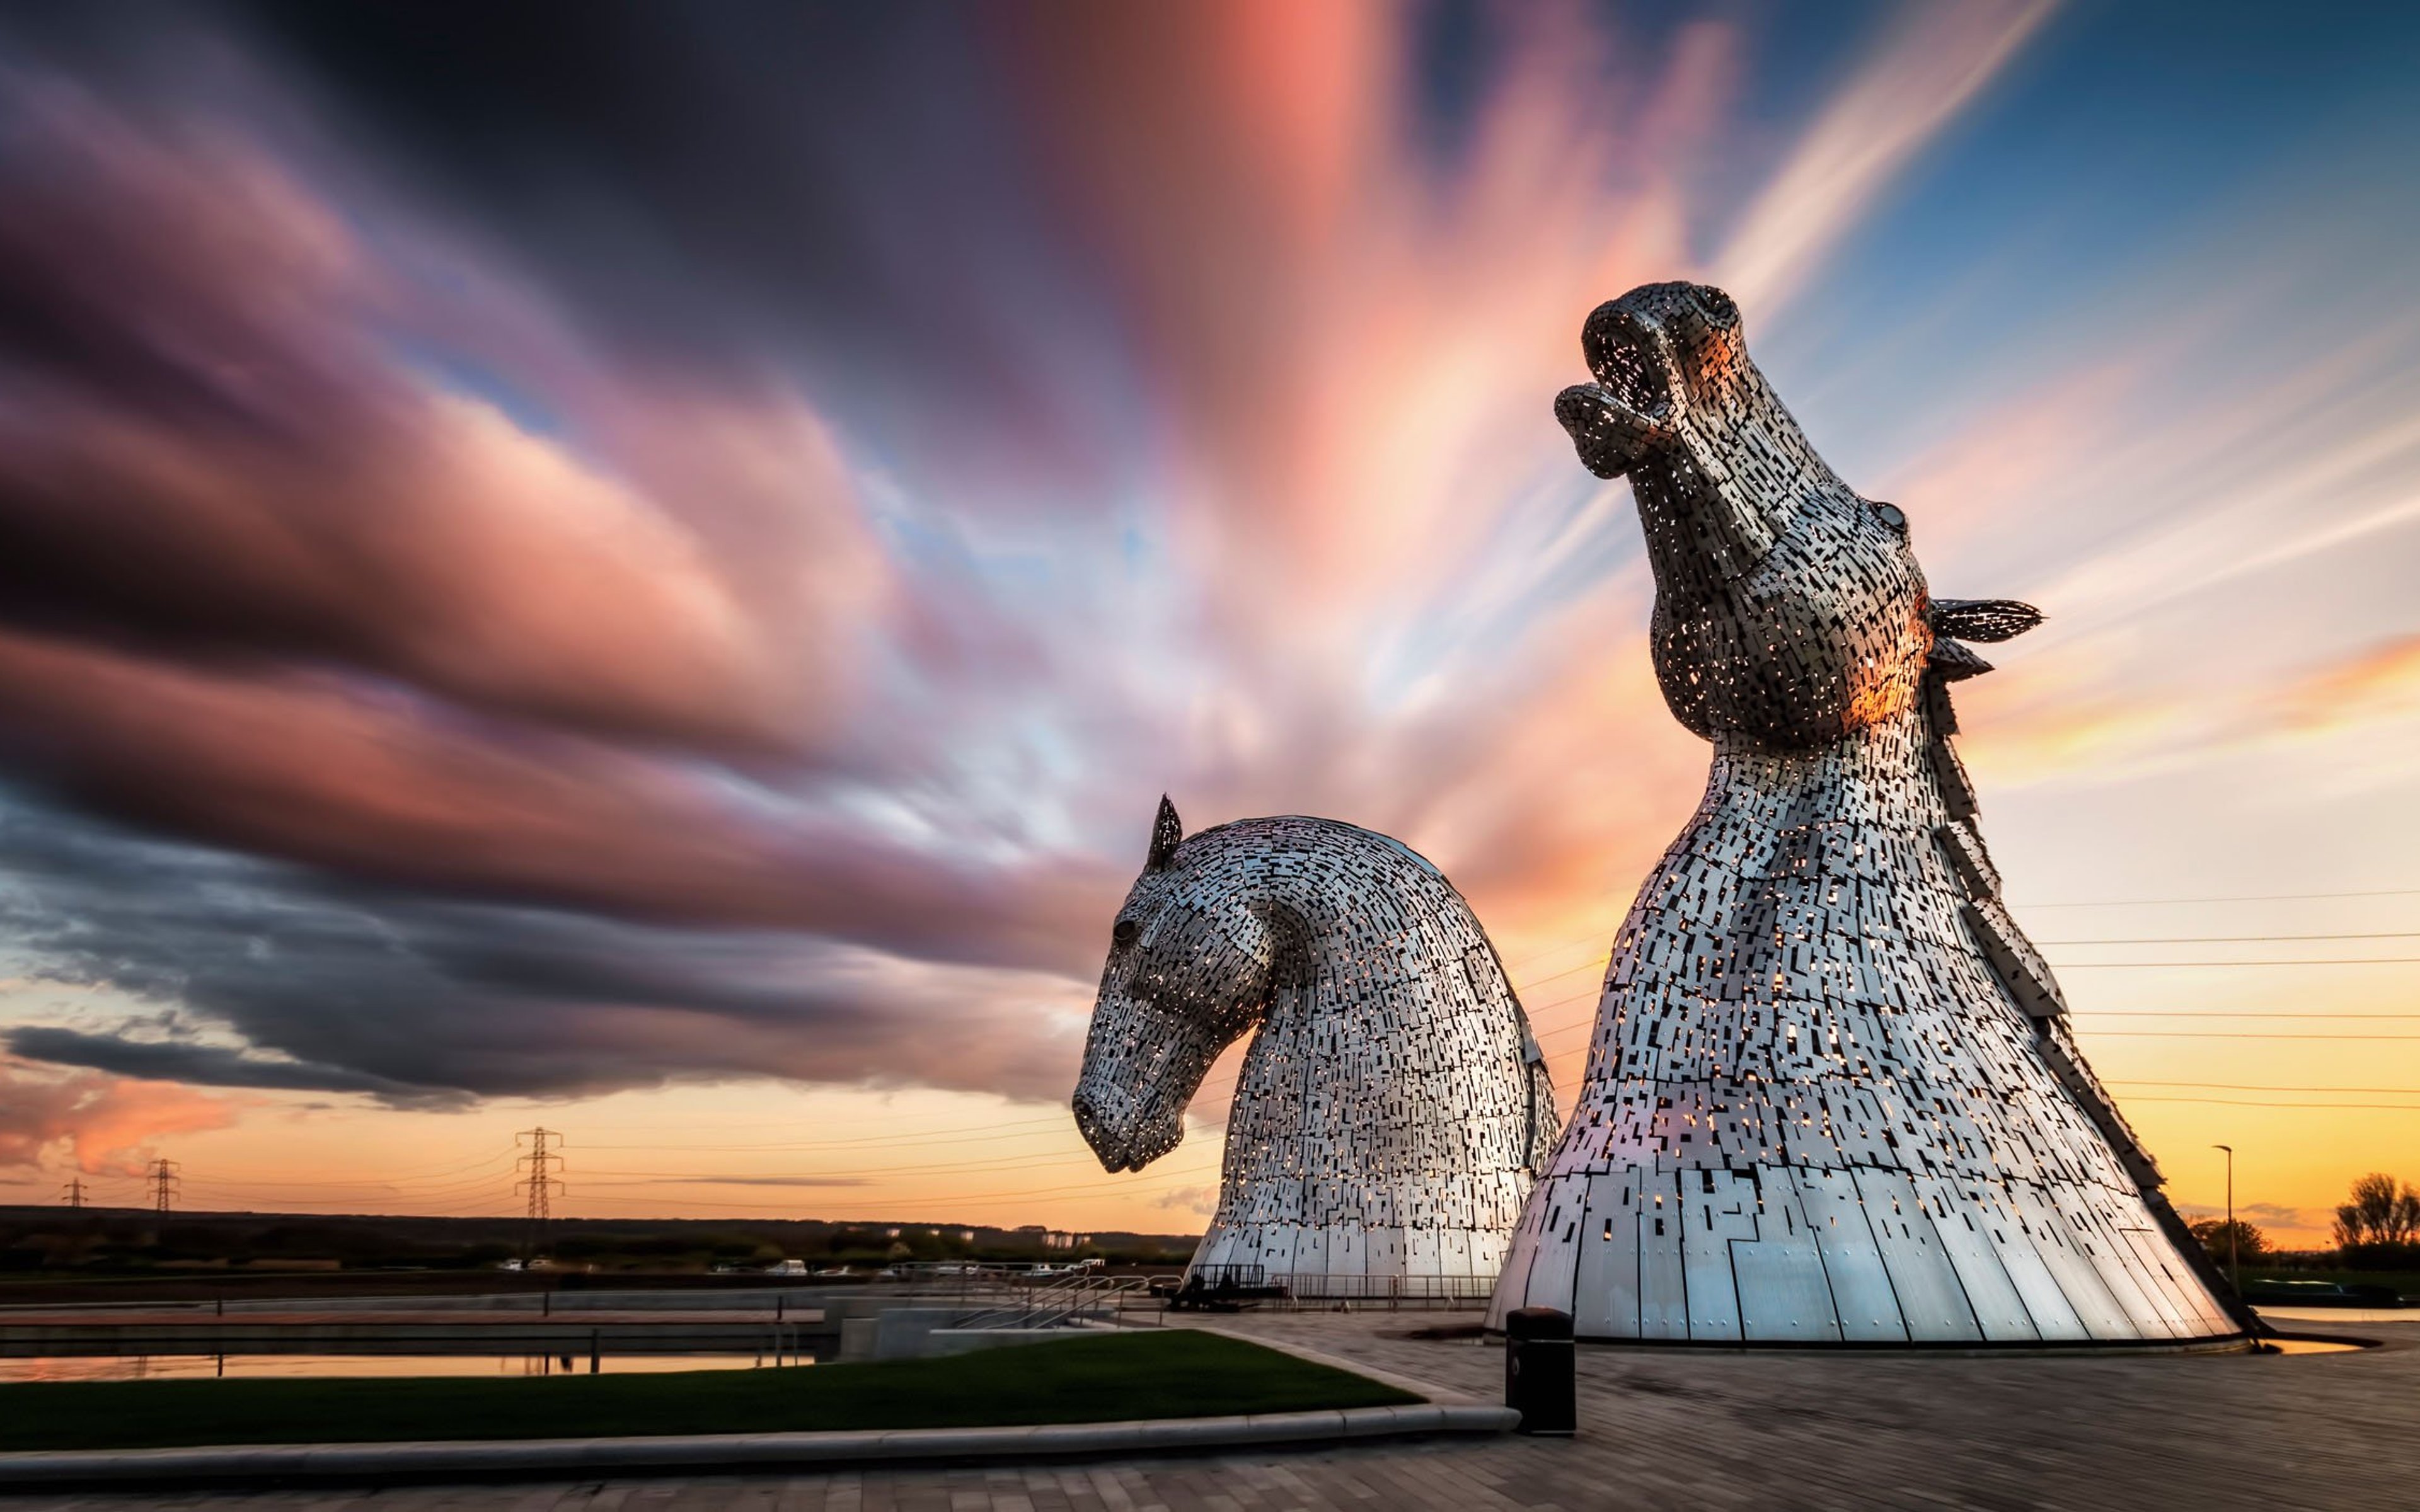 The Kelpies sculptures in Falkirk, Scotland in the evening.